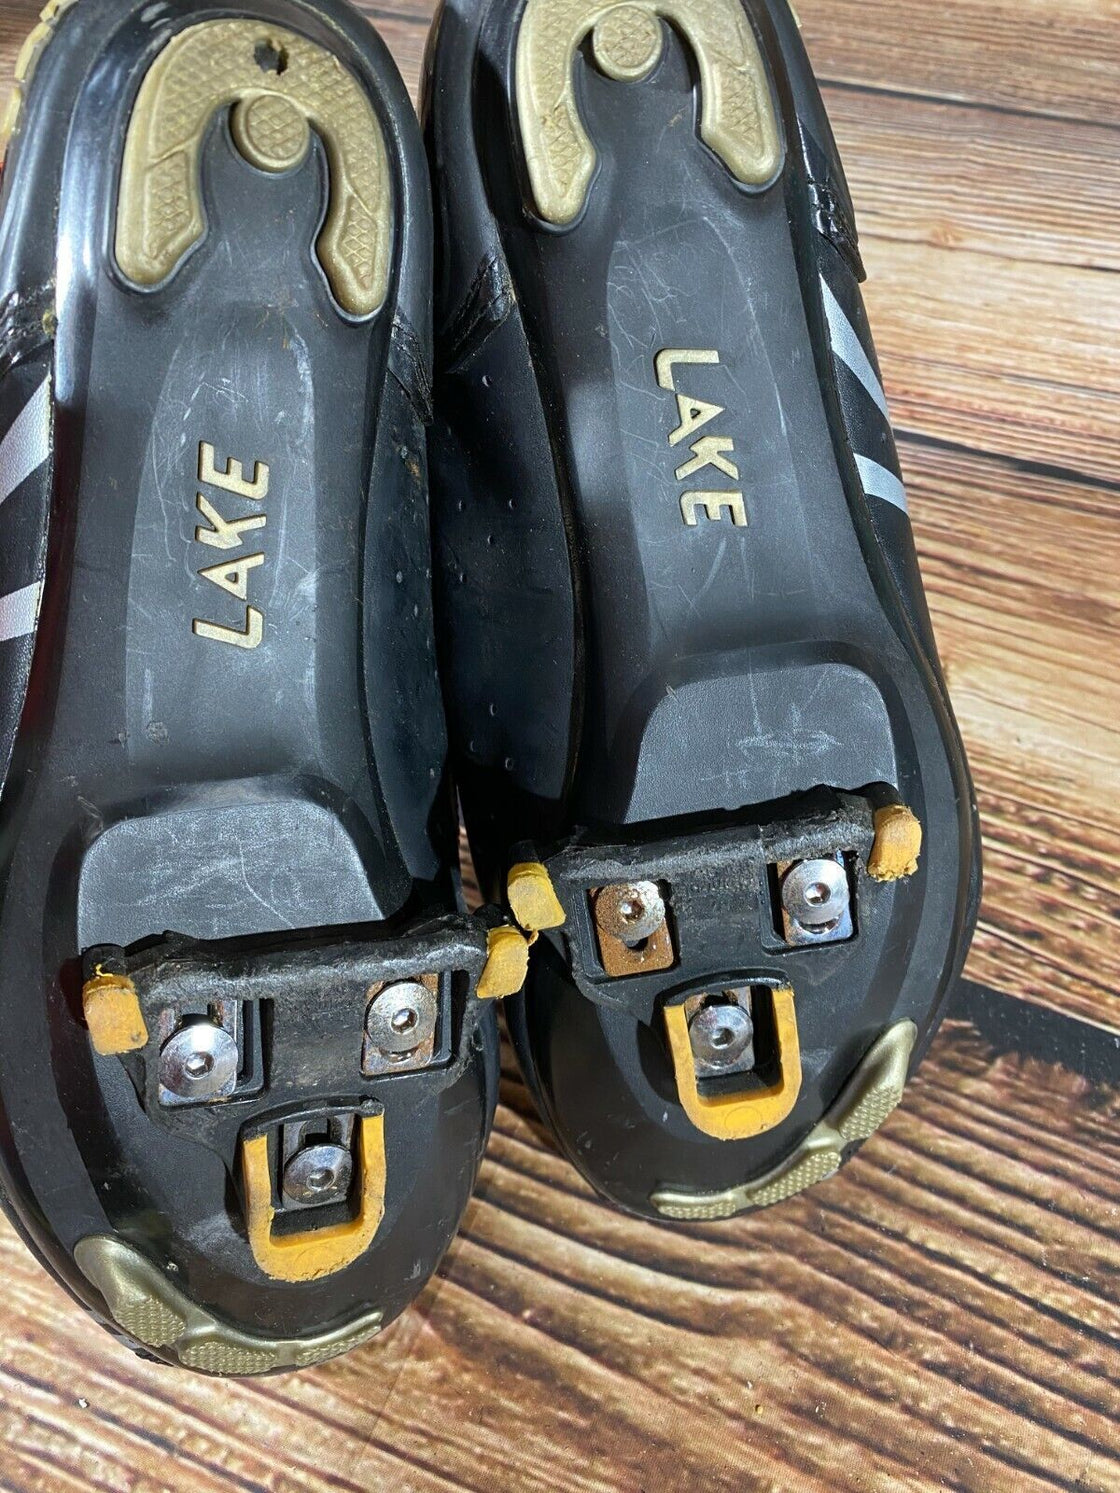 LAKE CX170 Gavia 1988 Edition Road Cycling Shoes 3 Bolts Size EU46 US12 Cleats